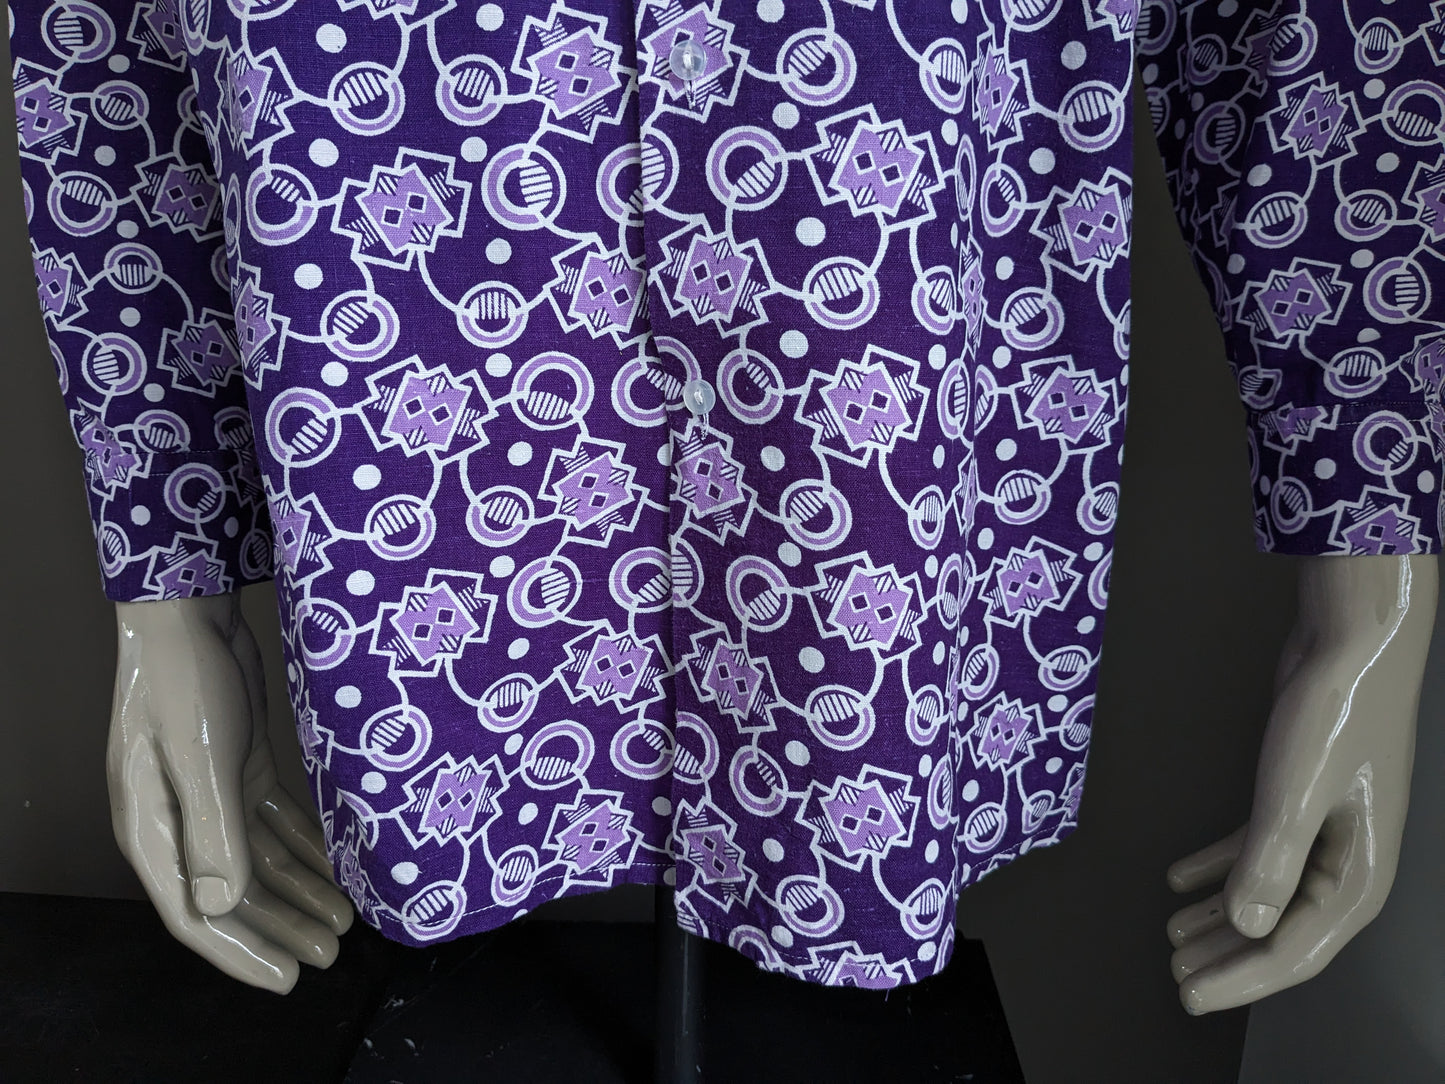 Camicia di loto vintage. Stampa bianca viola. Dimensione 2xl / xxl - 3xl / xxxl.